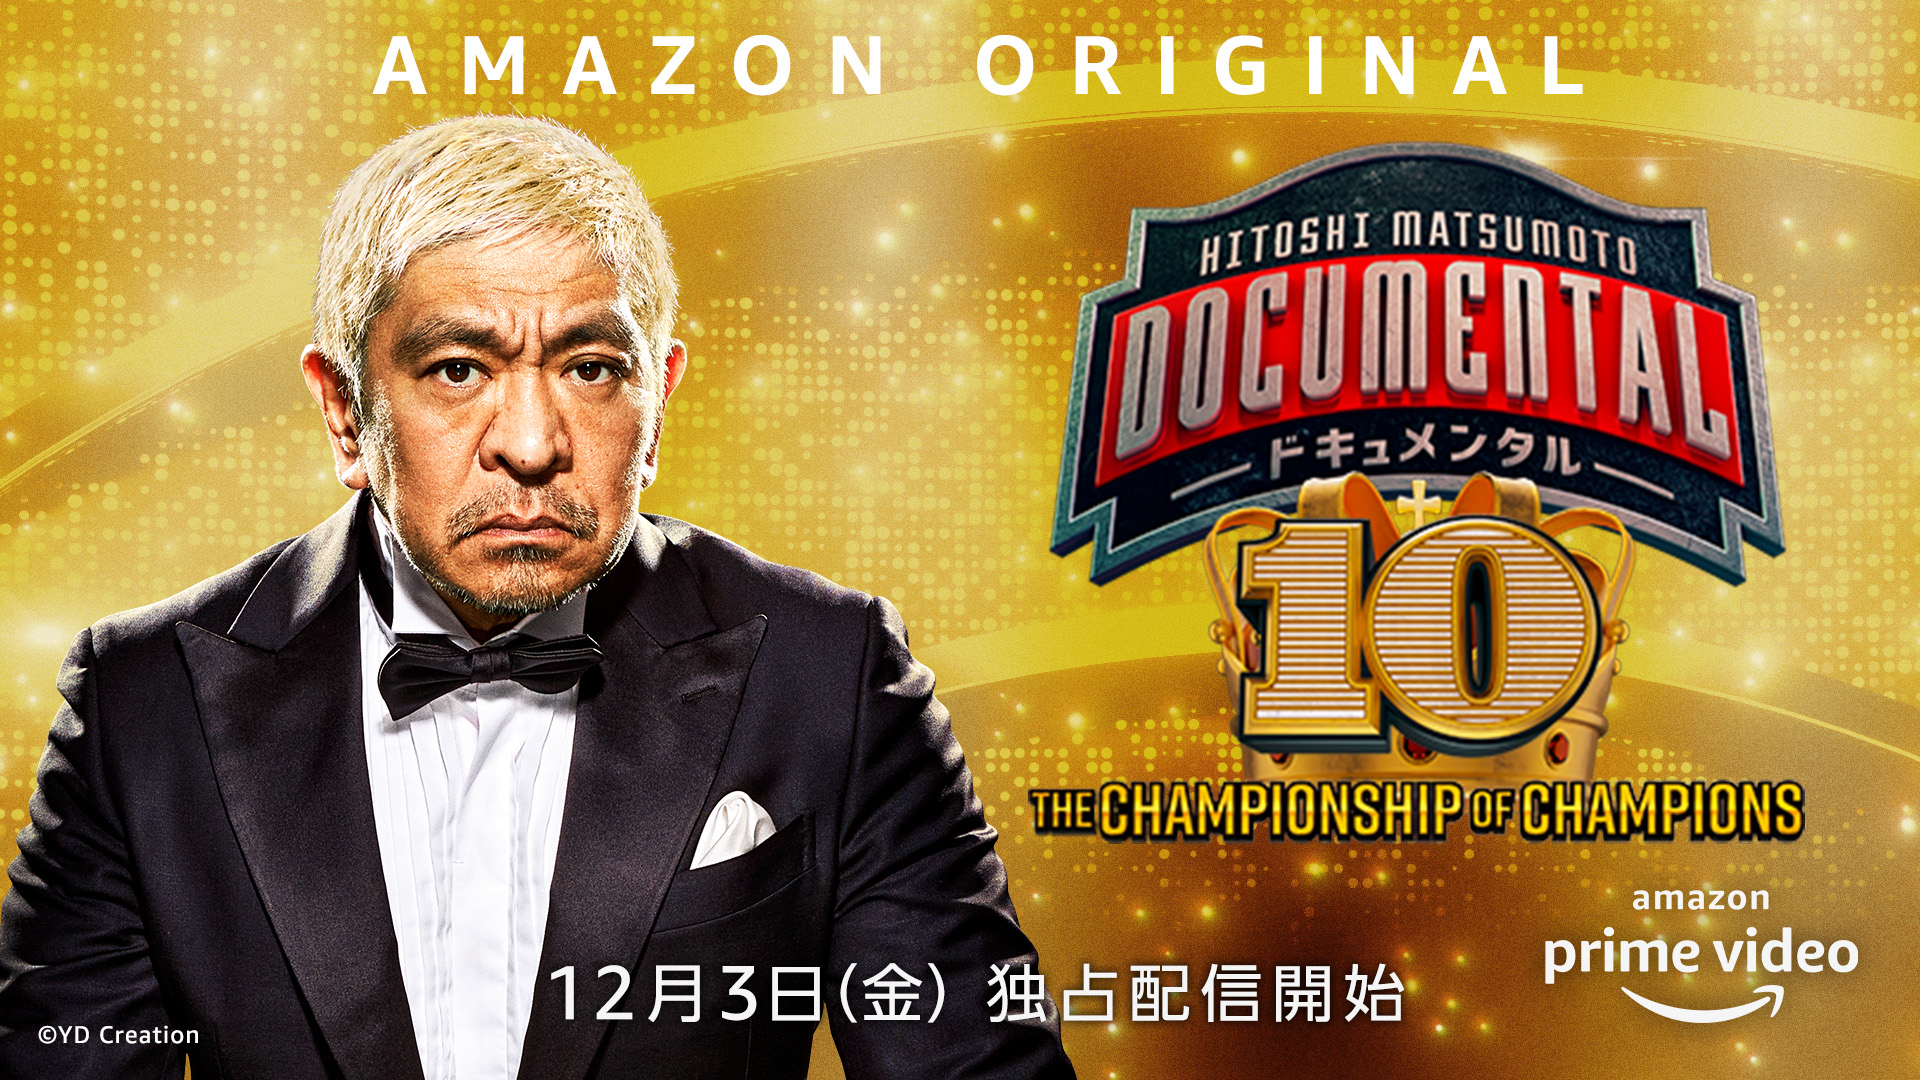 Hitoshi Matsumoto Presents ドキュメンタル シーズン10 6人の歴代王者が集結する 初の チャンピオン大会 が開催決定 アマゾンジャパン合同会社のプレスリリース